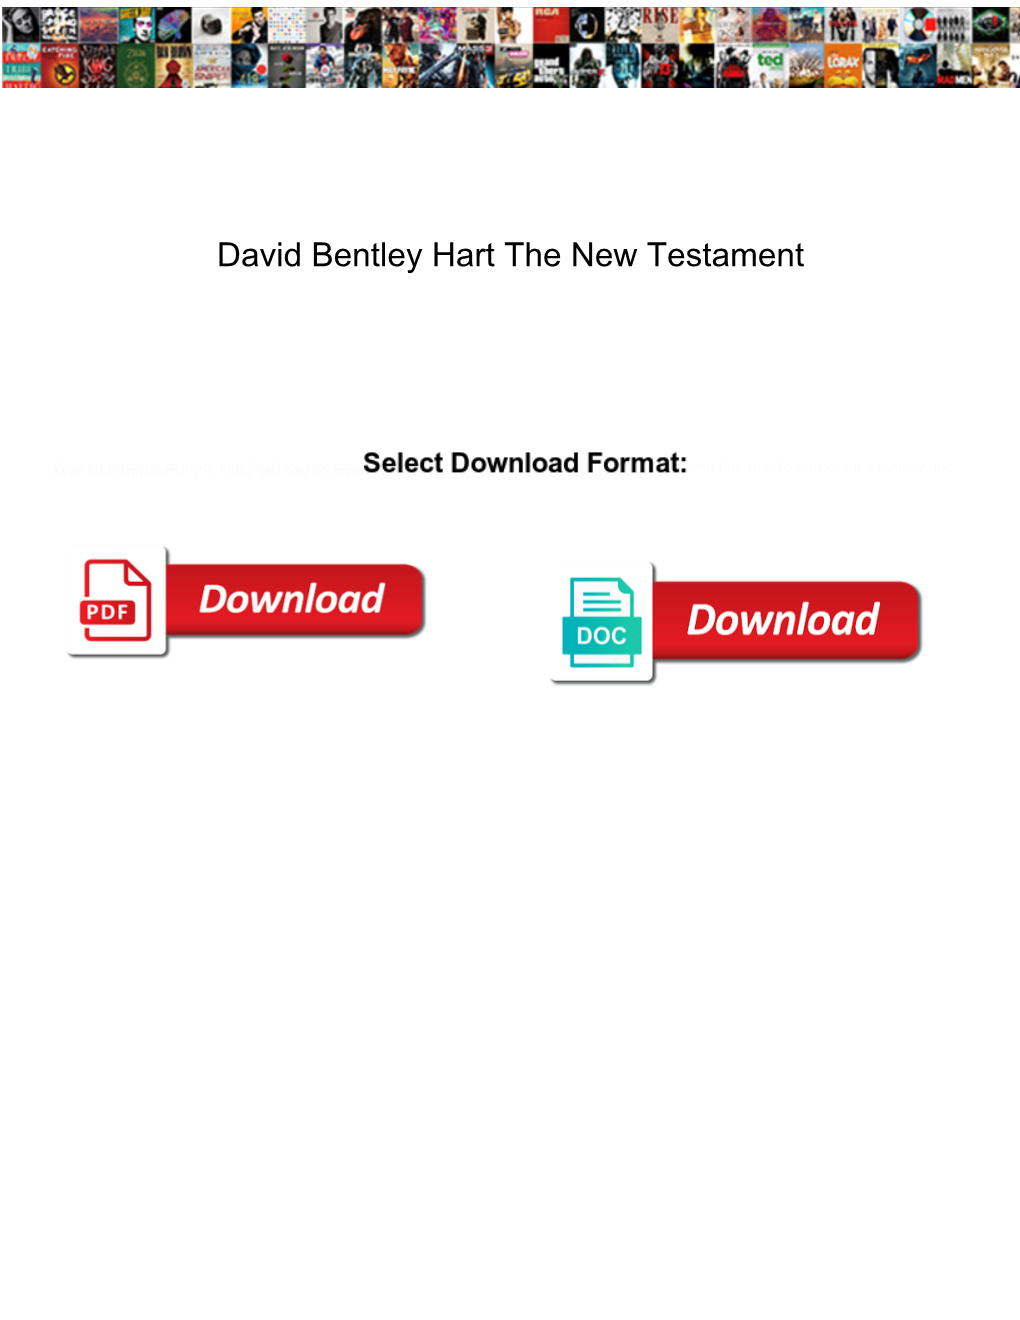 David Bentley Hart the New Testament